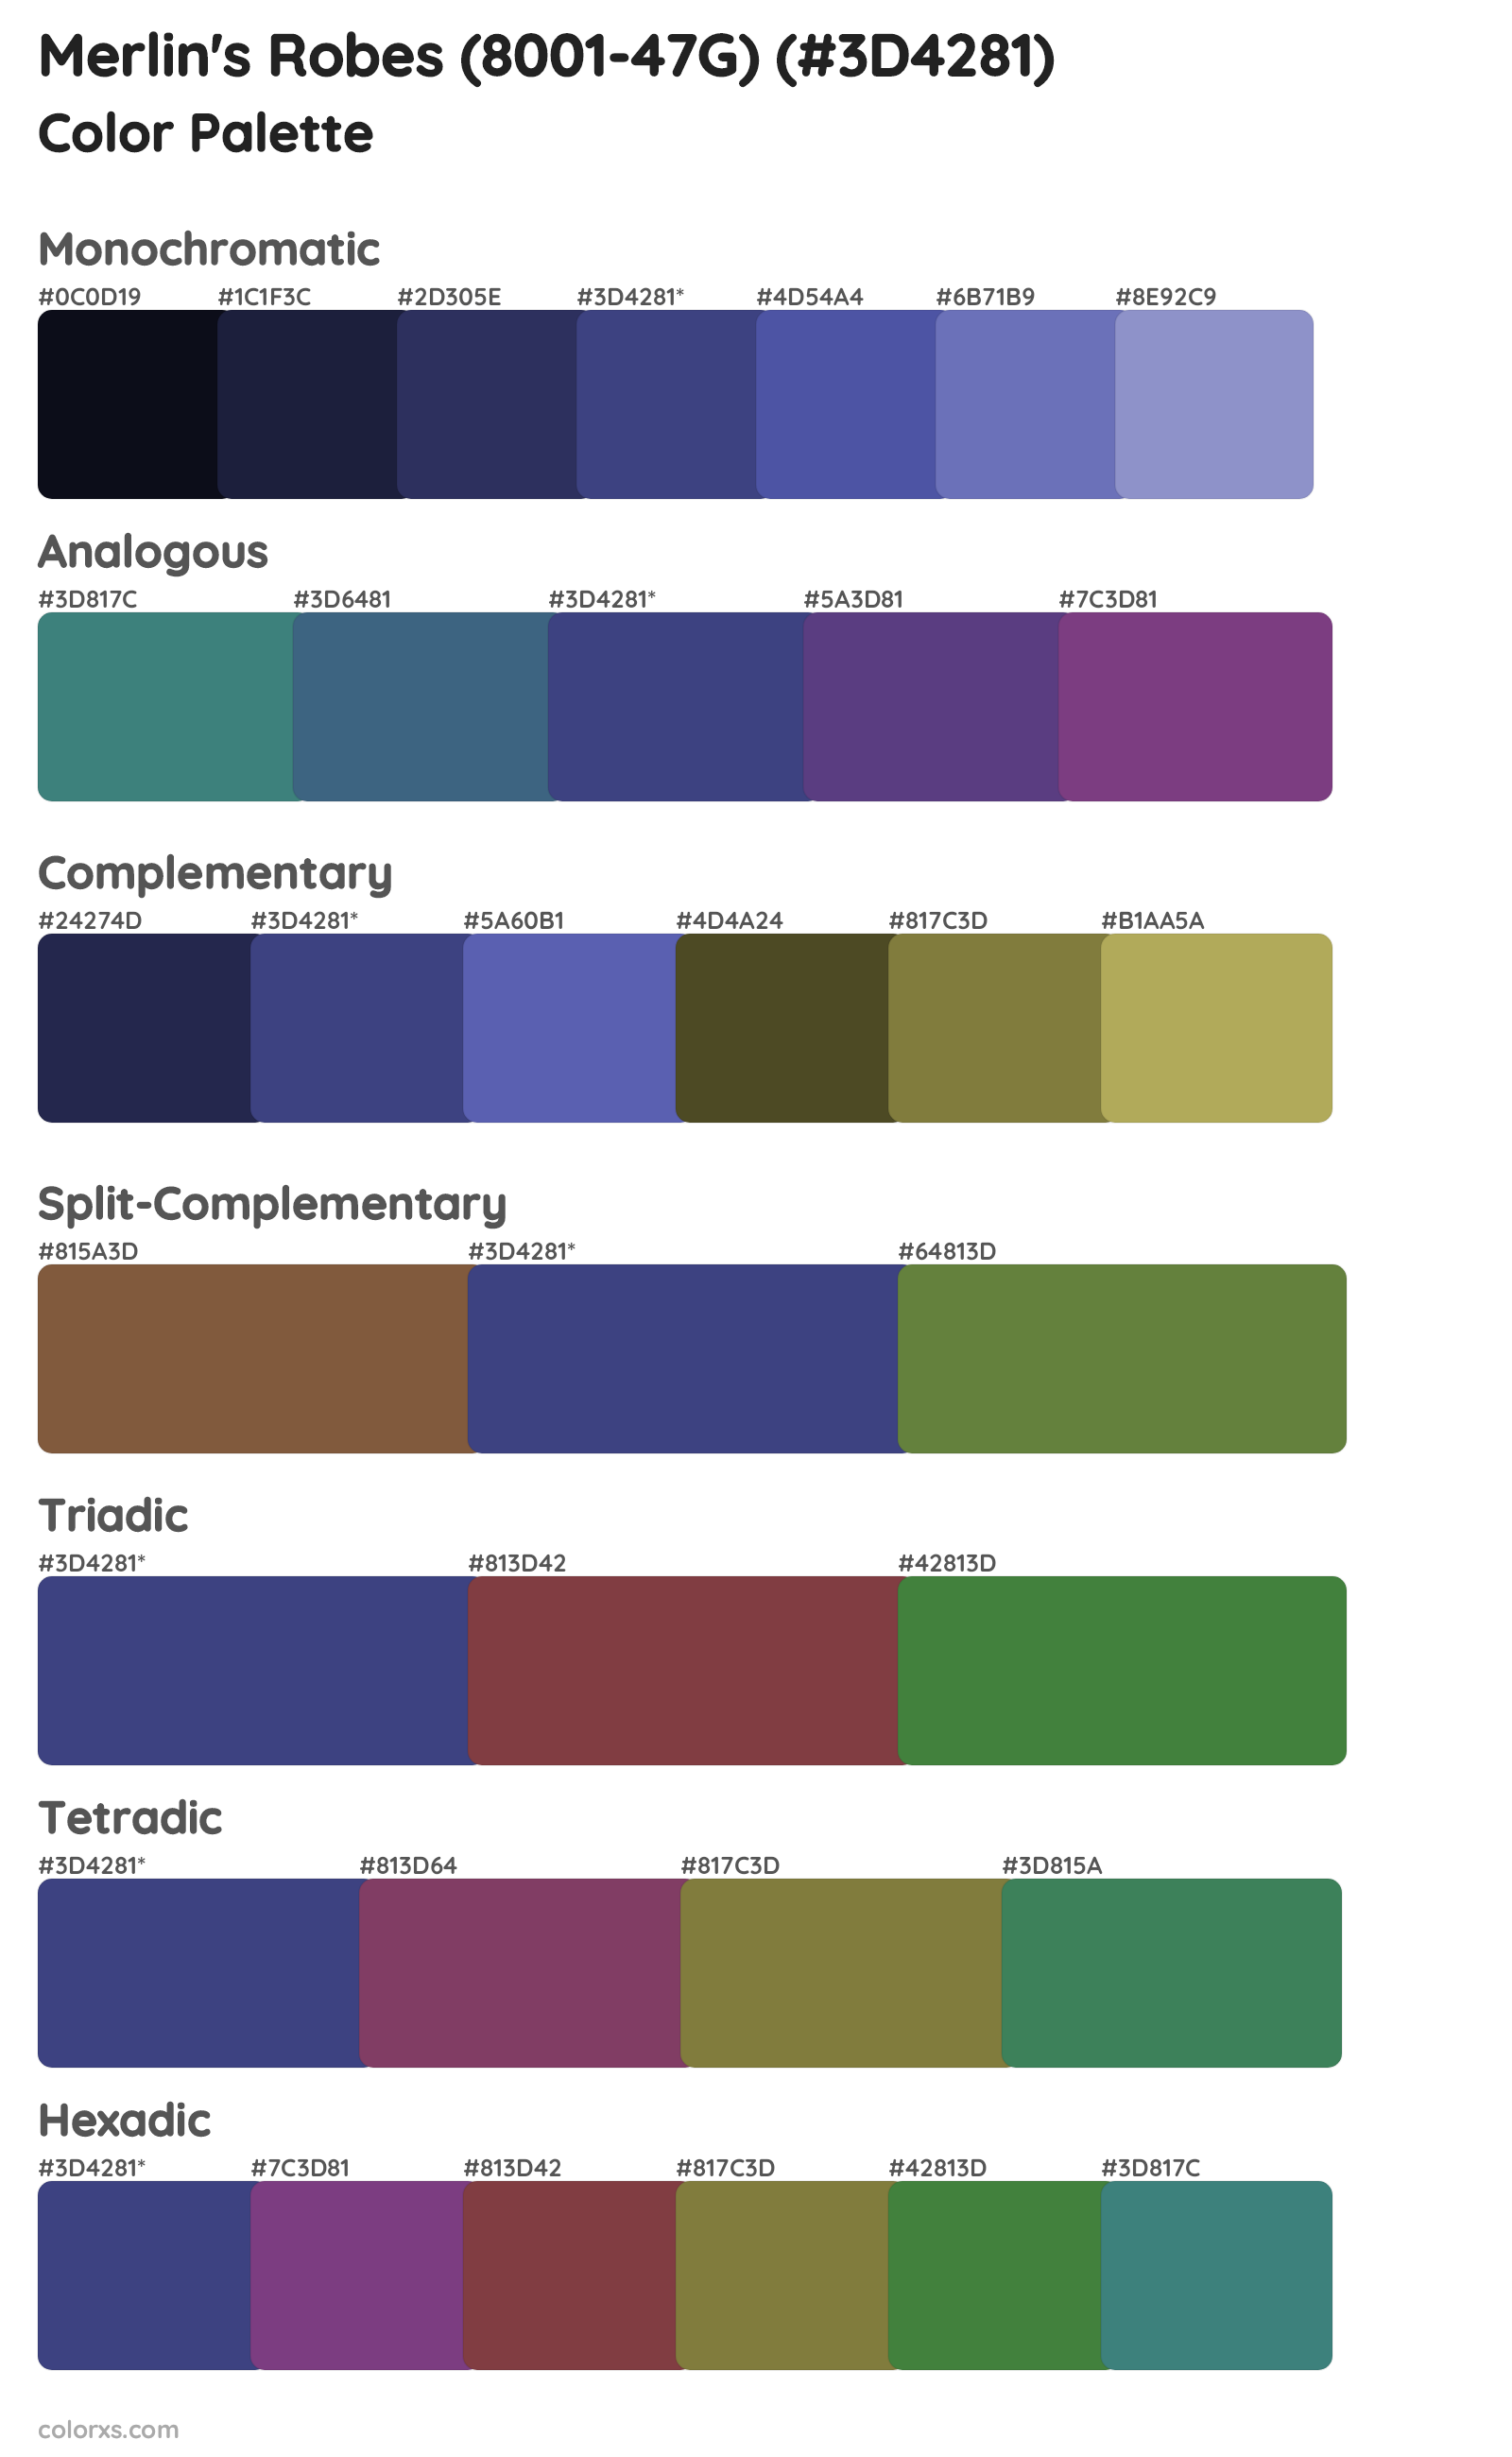 Merlin's Robes (8001-47G) Color Scheme Palettes